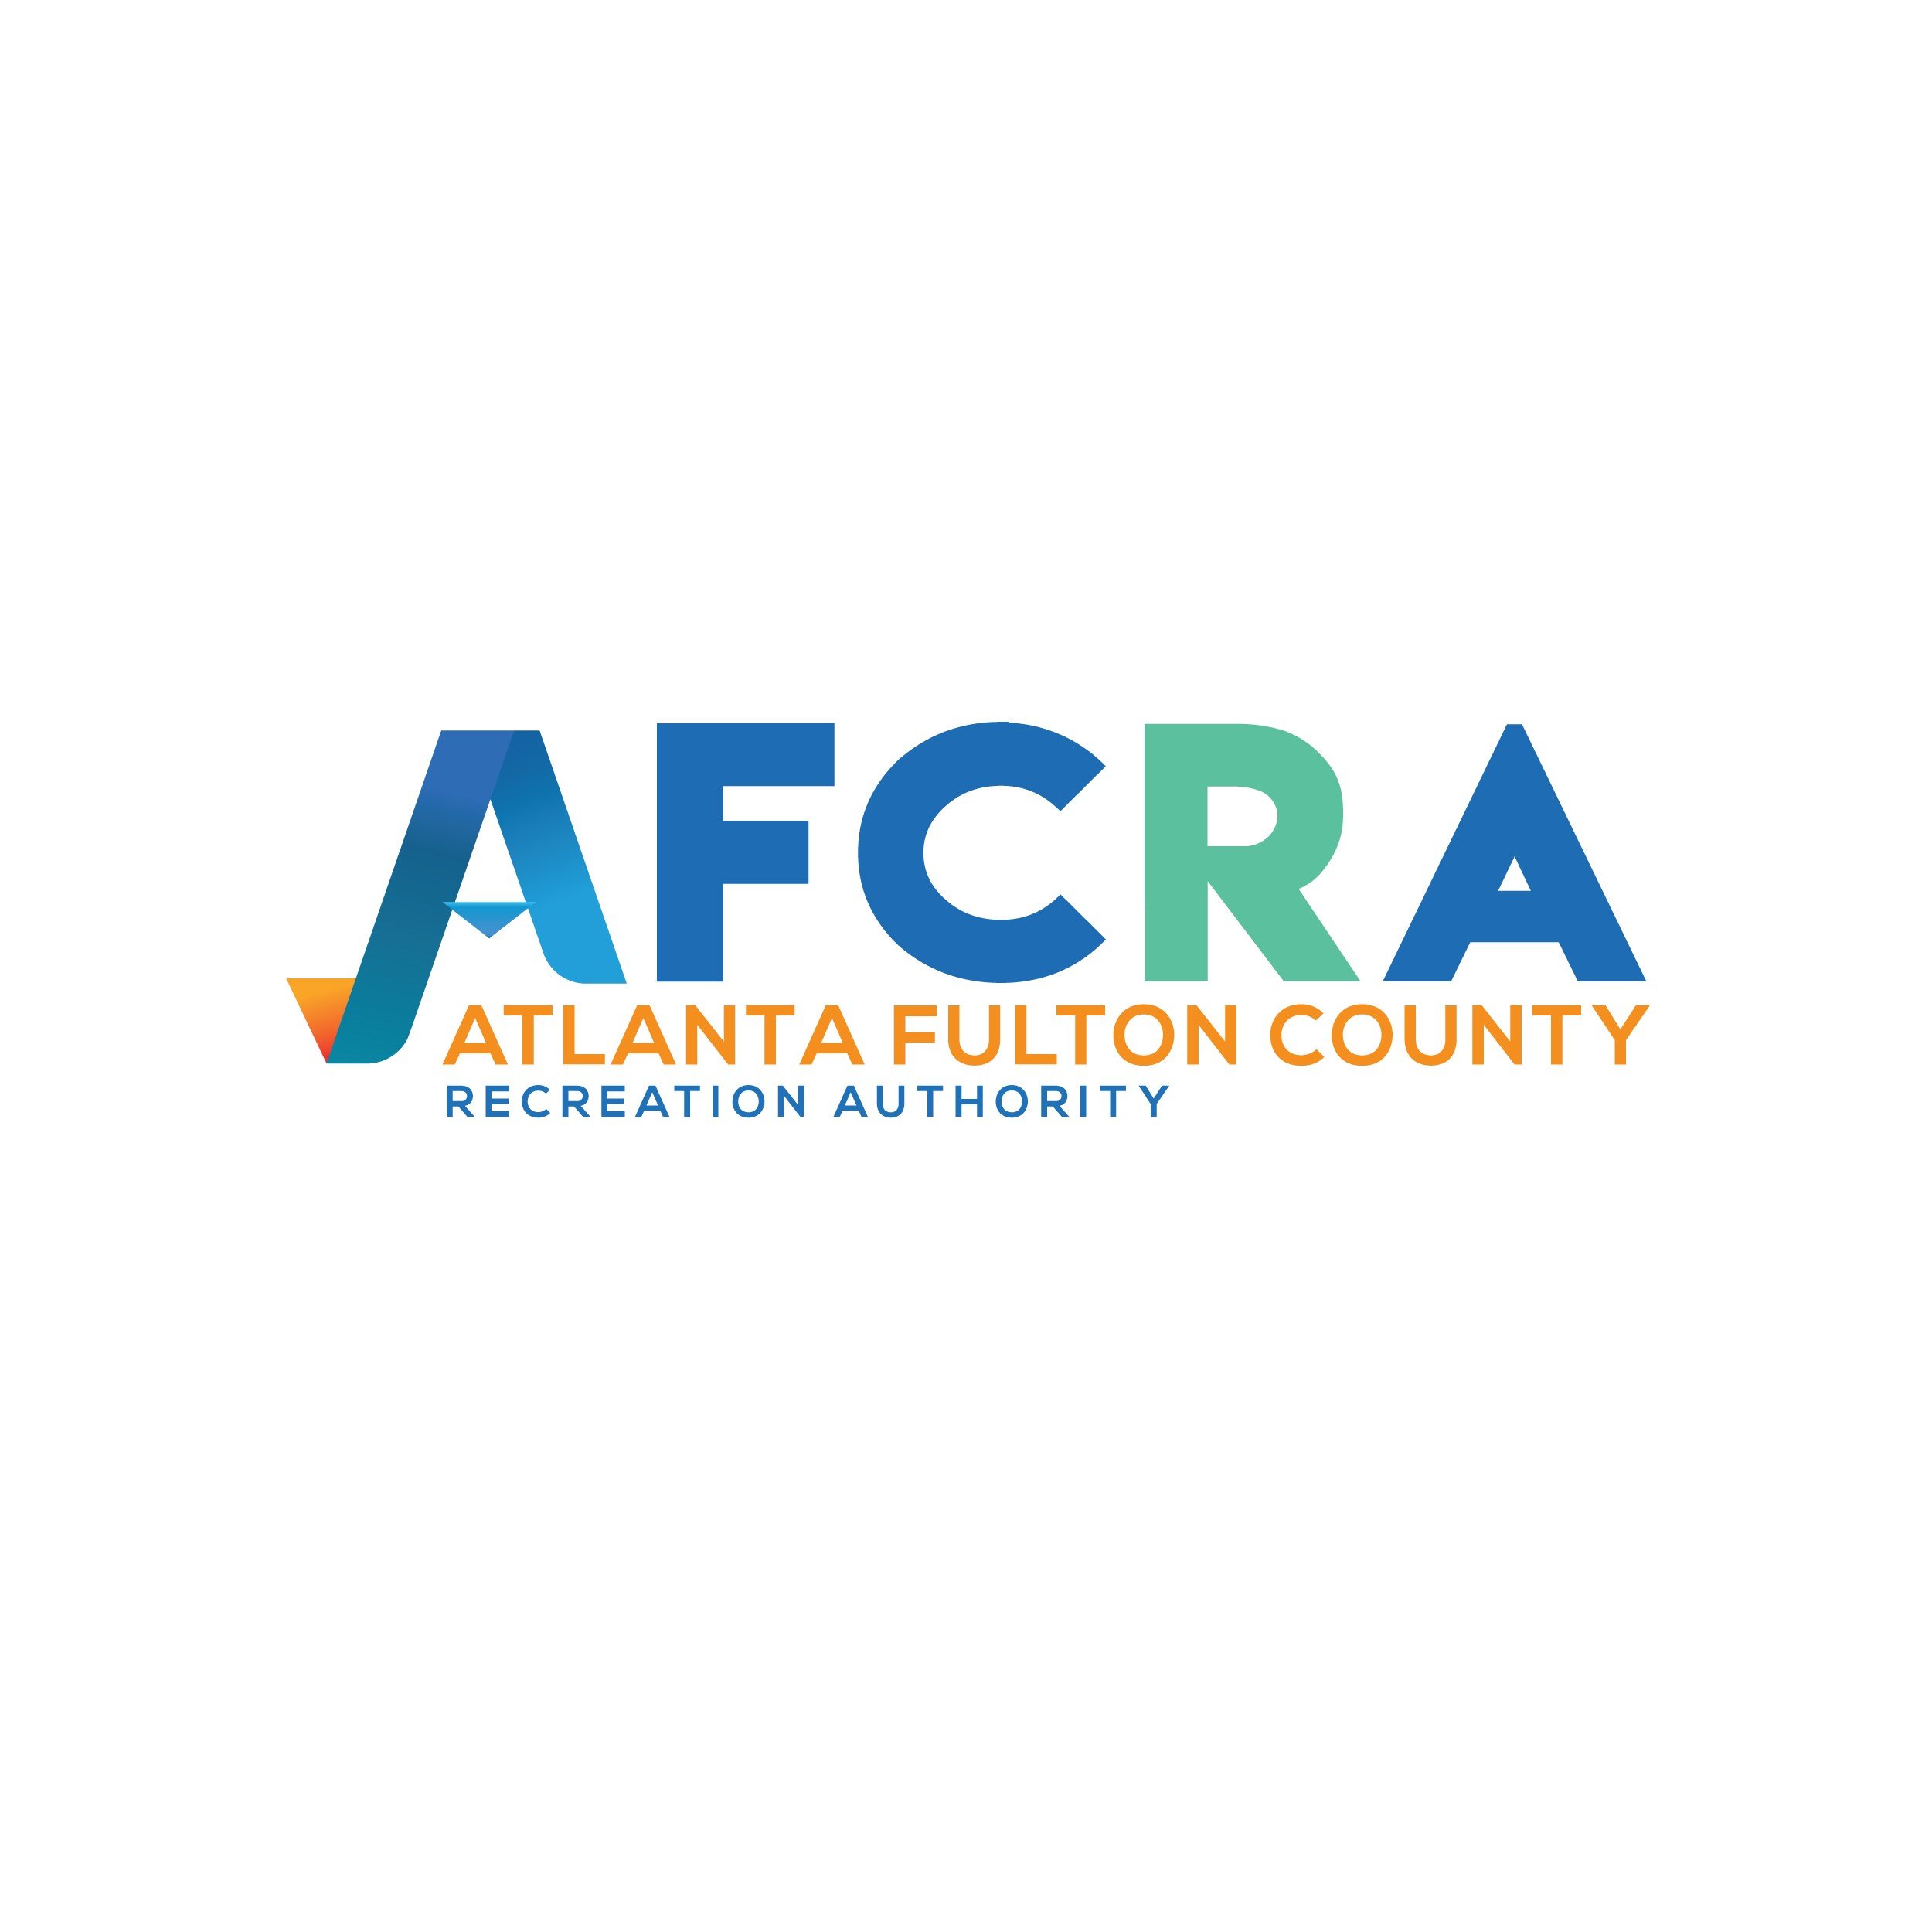 AFCRA Logo JPEG.jpg